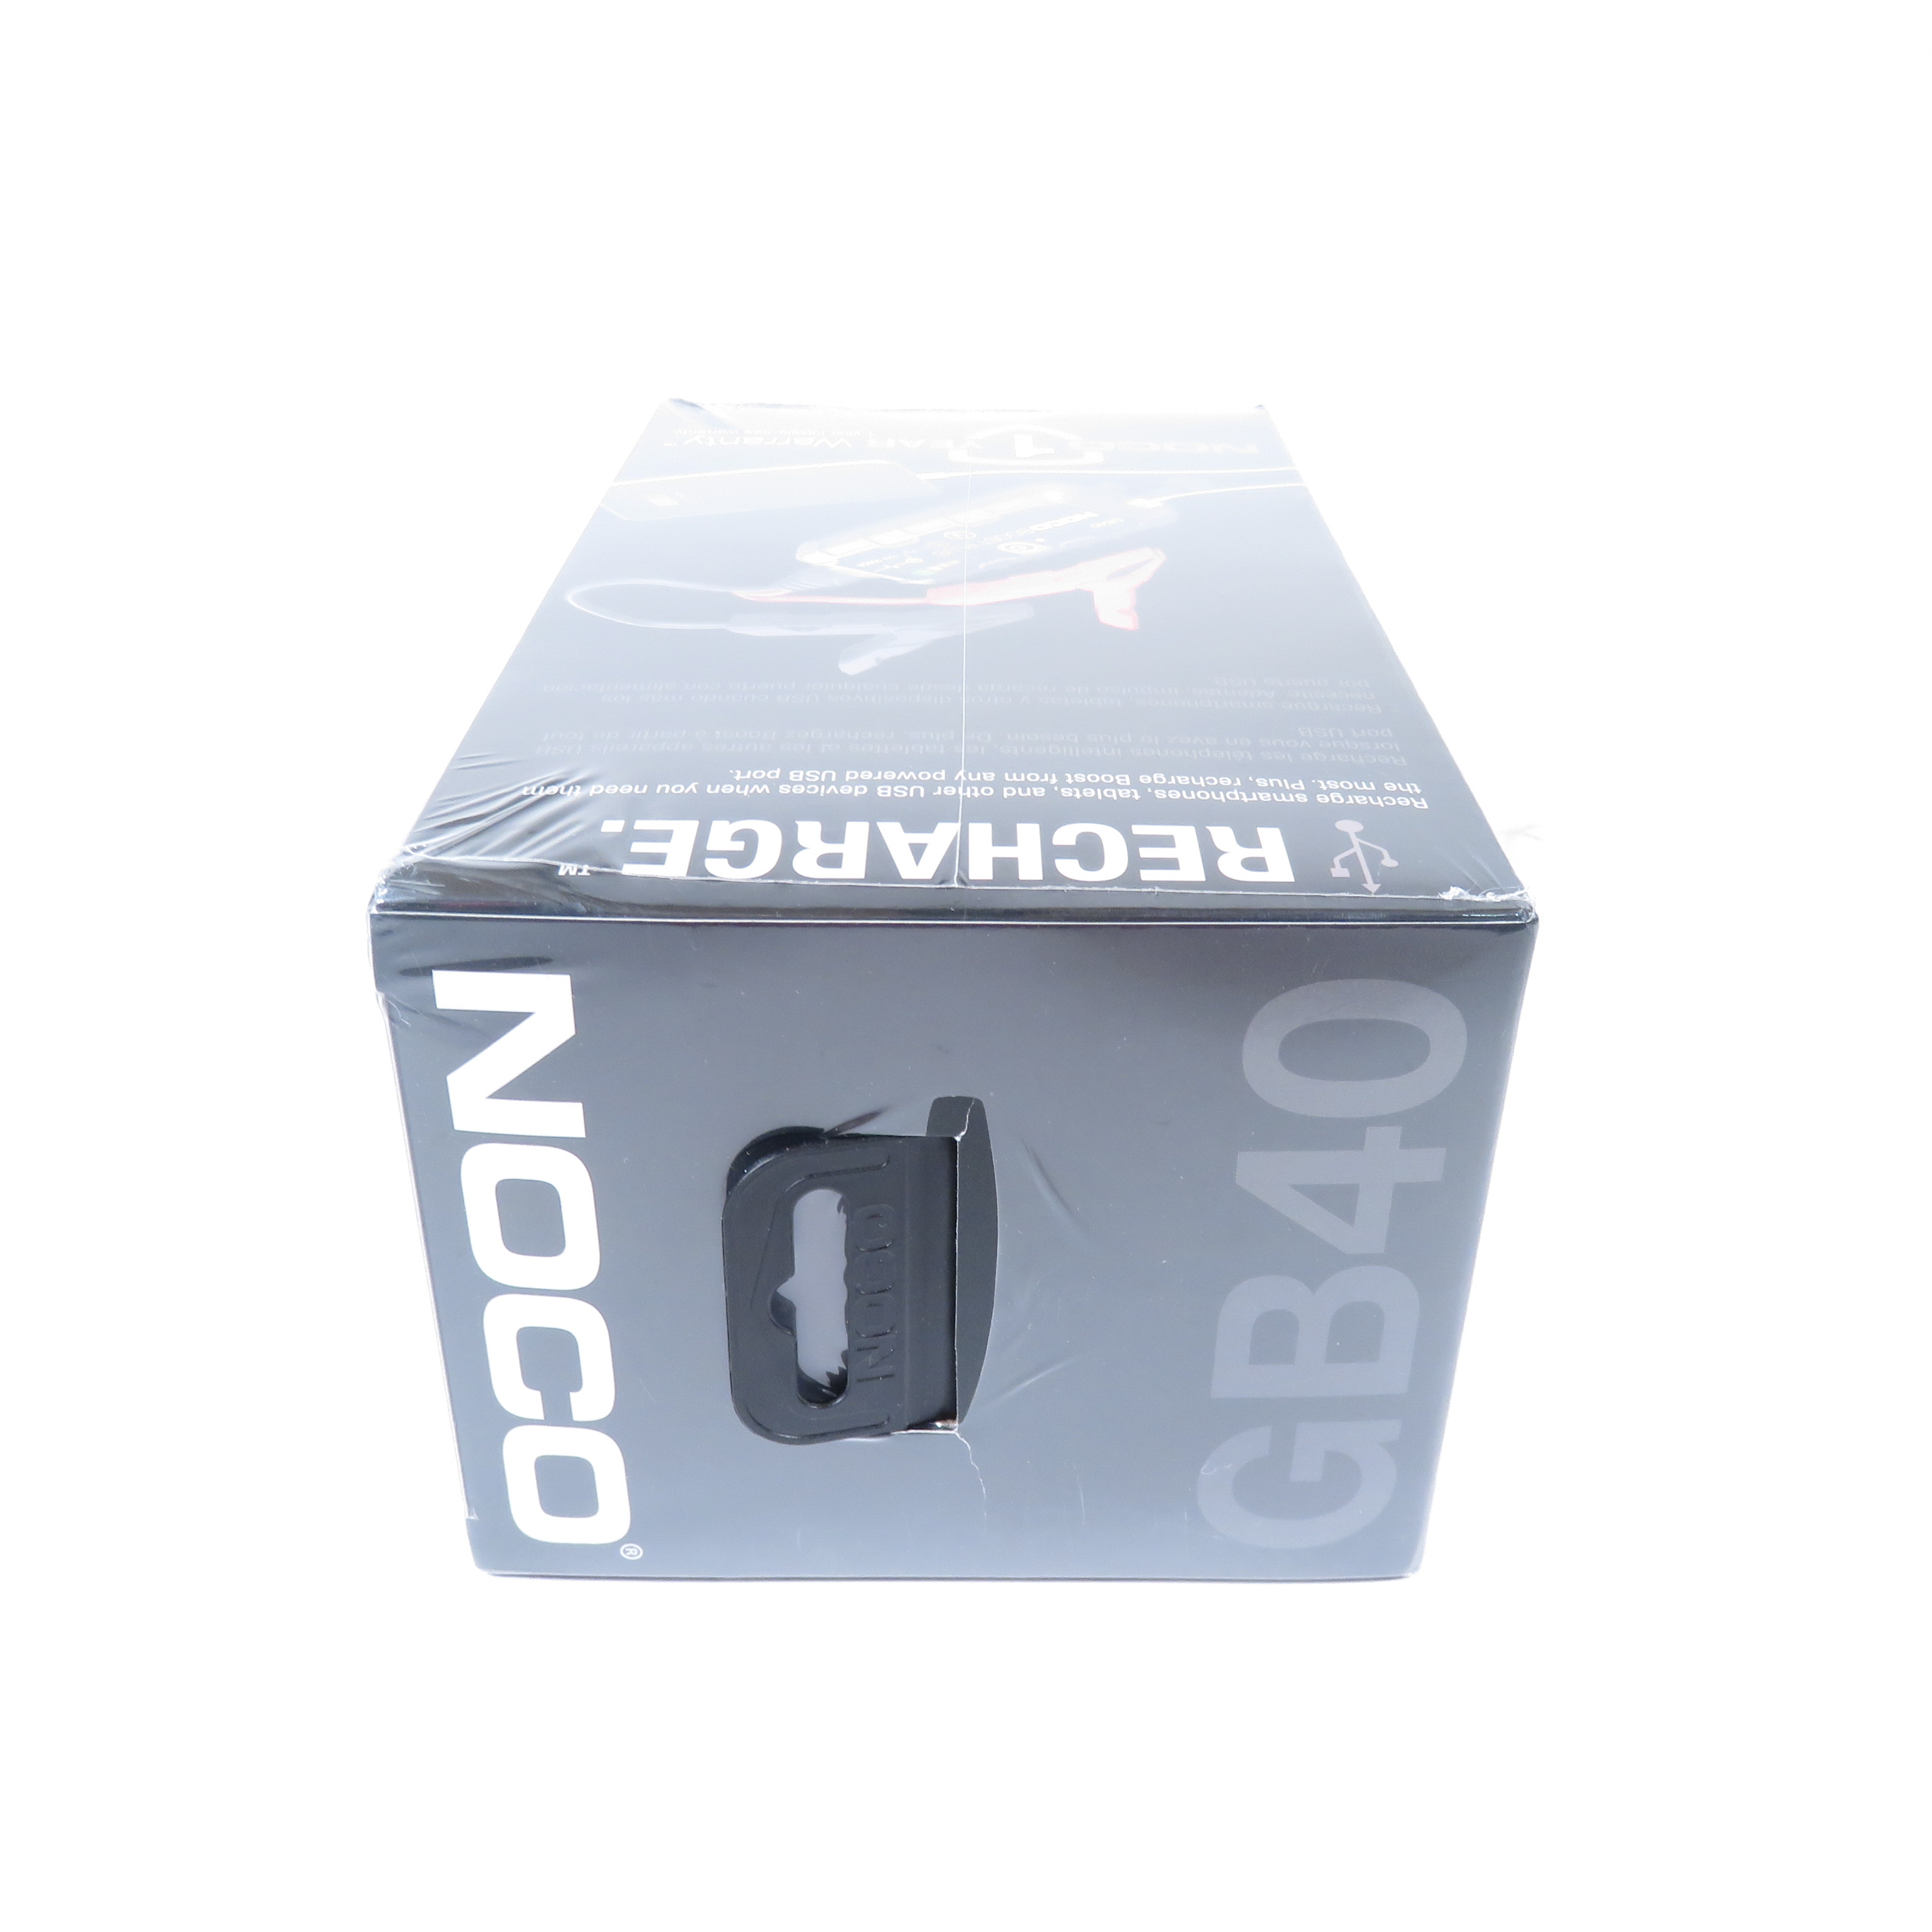 NOCO Boost Plus GB40 1000-Amp 12-Volt UltraSafe Lithium Jump Starter/Booster